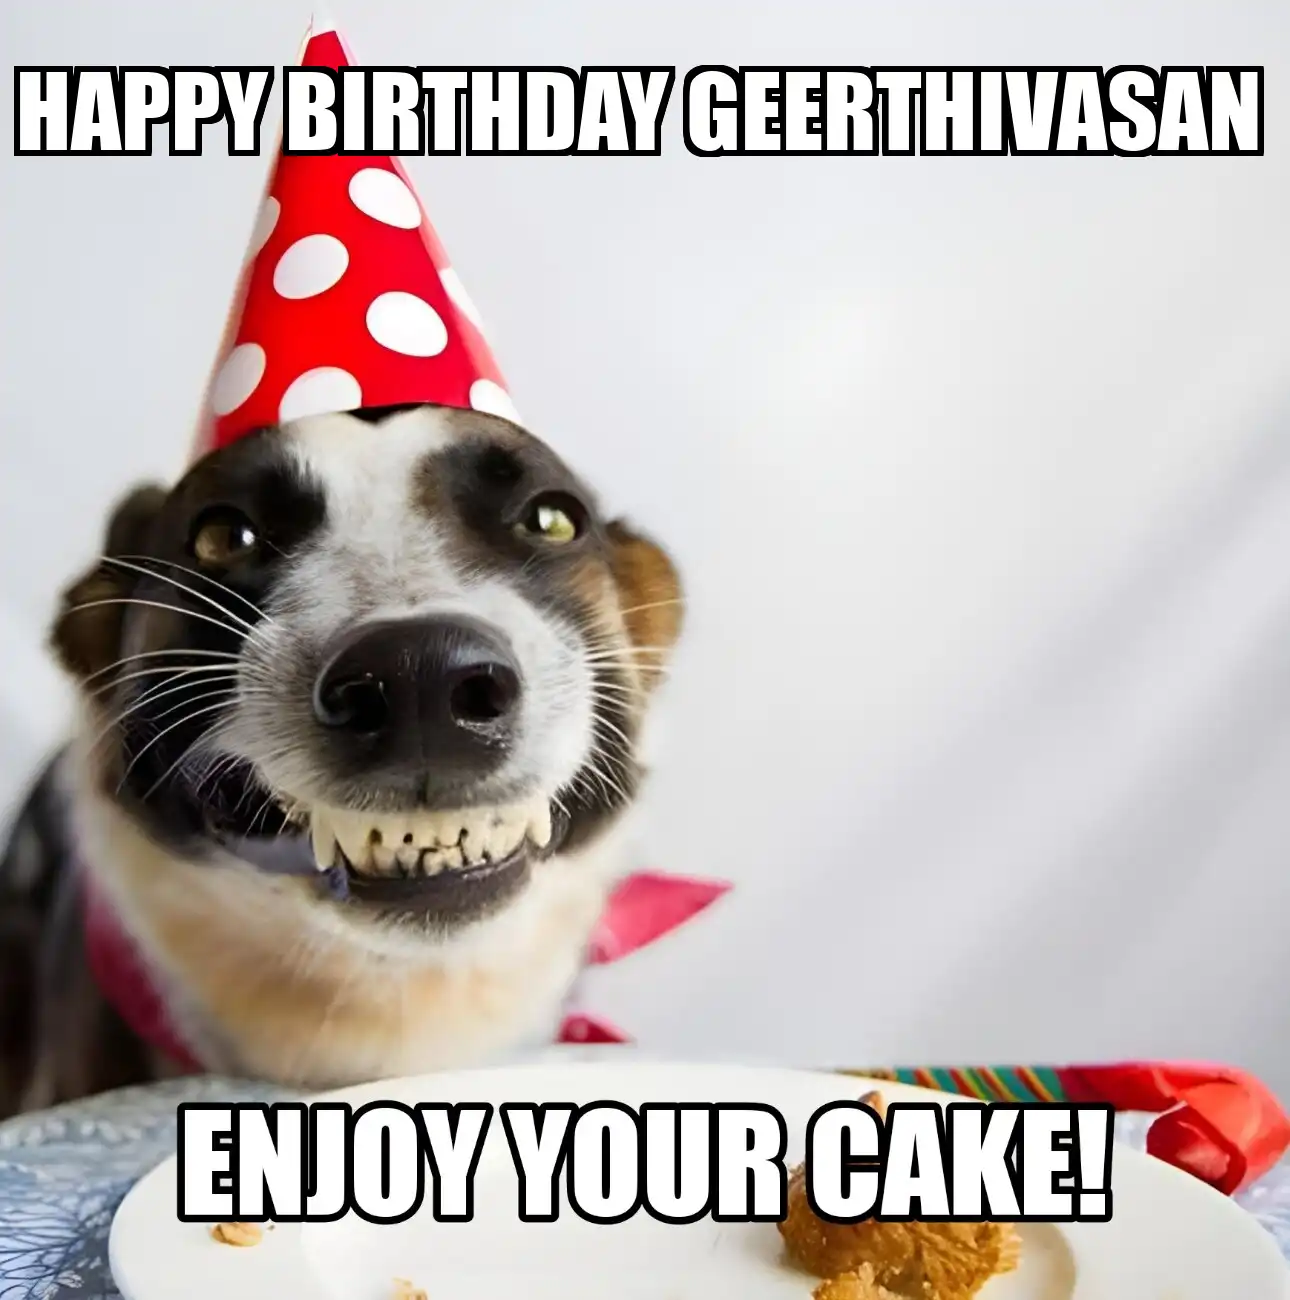 Happy Birthday Geerthivasan Enjoy Your Cake Dog Meme